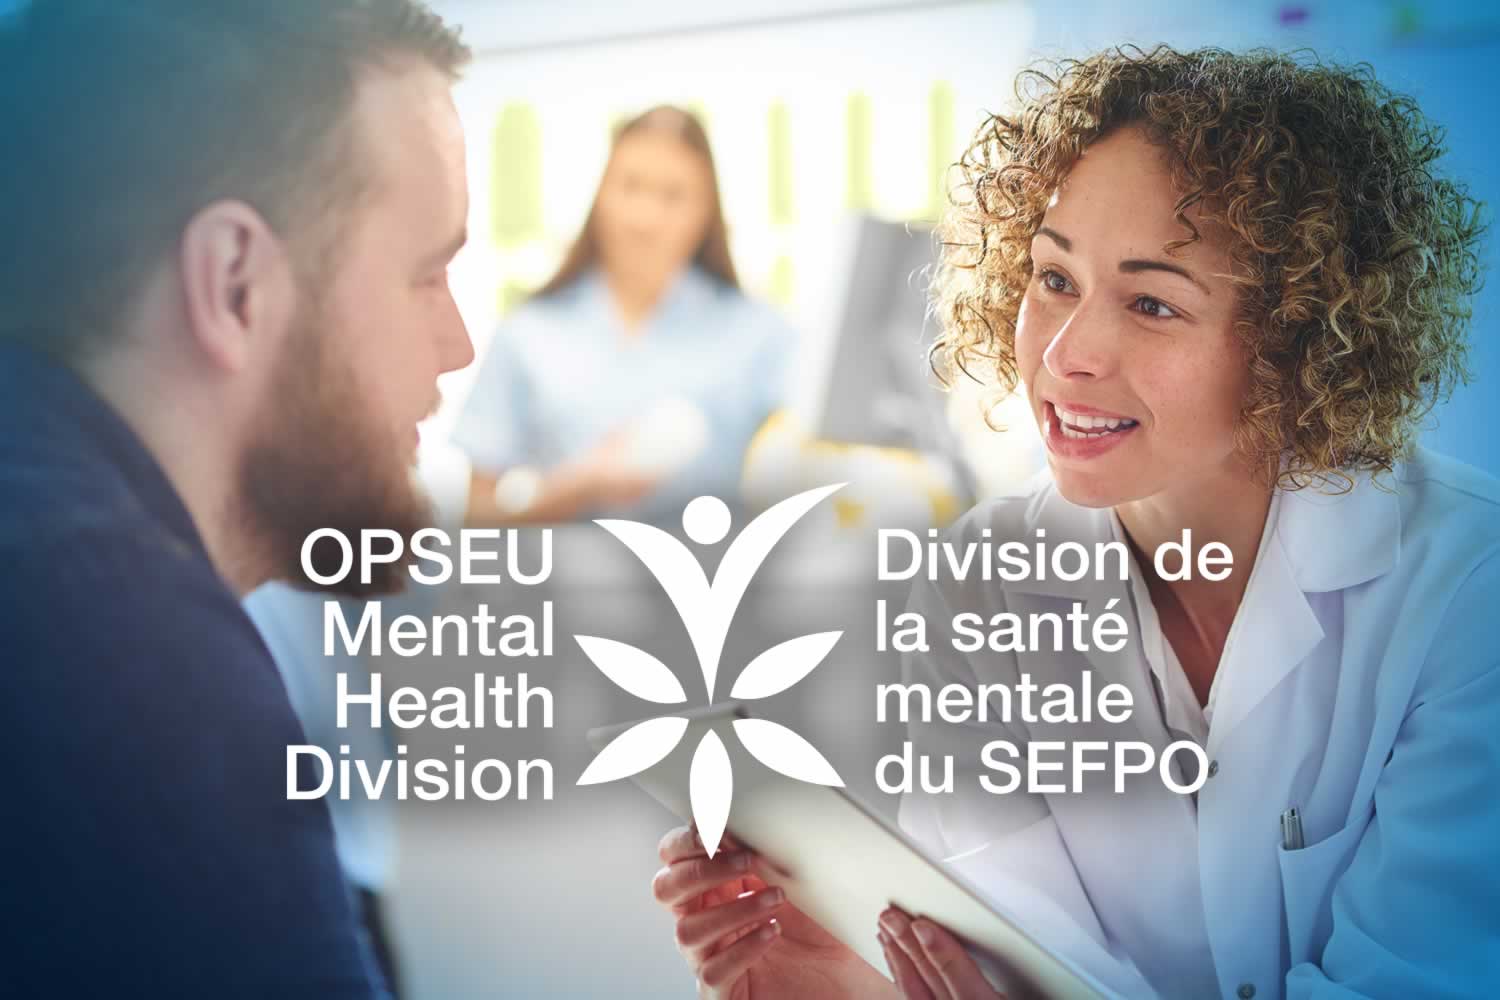 OPSEU Mental Health Division / SEFPO Division de la sante mentale du SEFPO